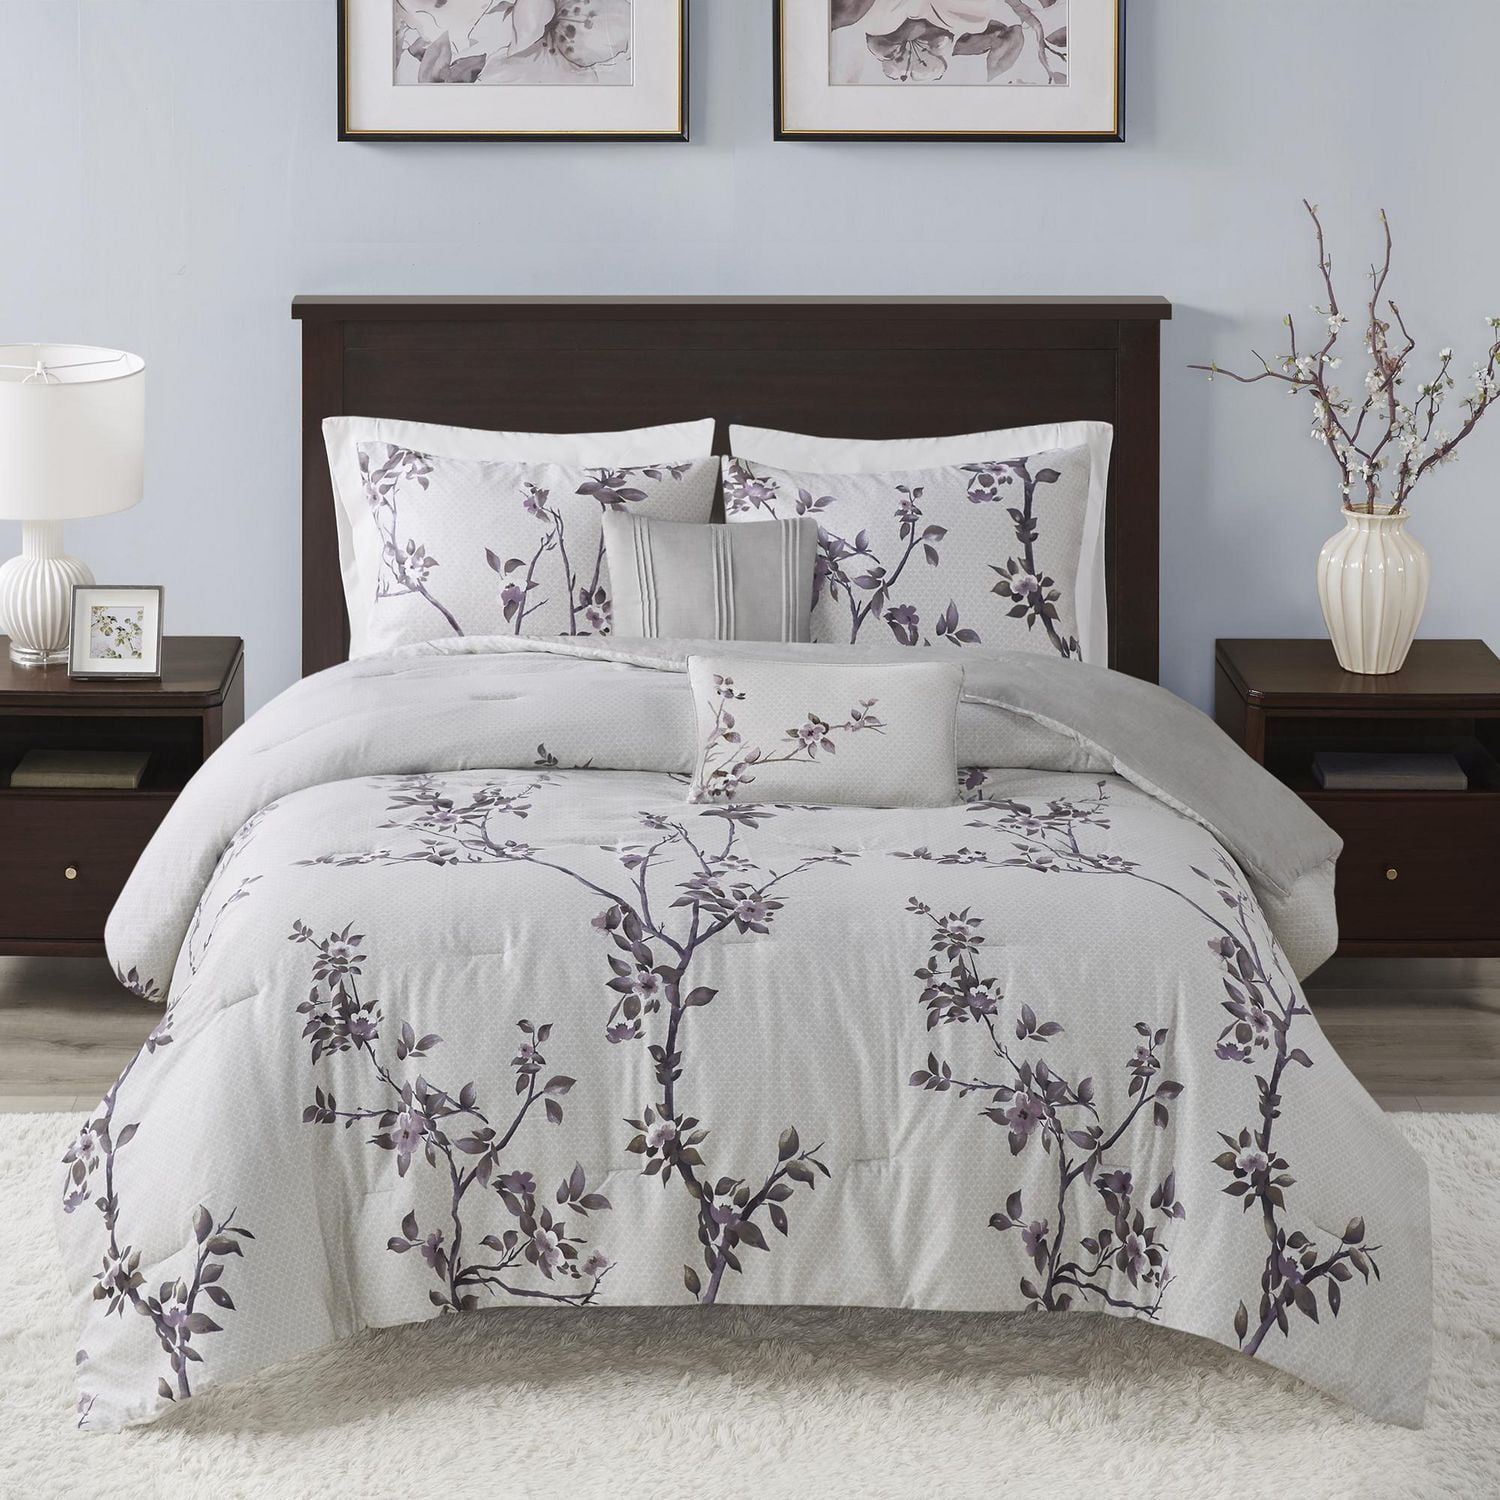 King Size Comforter Set - Charcoal and Grey King Comforter, Soft Bedding  Comforter Sets for All Seasons, King Comforter Set - 3 Pieces - 1 Comforter